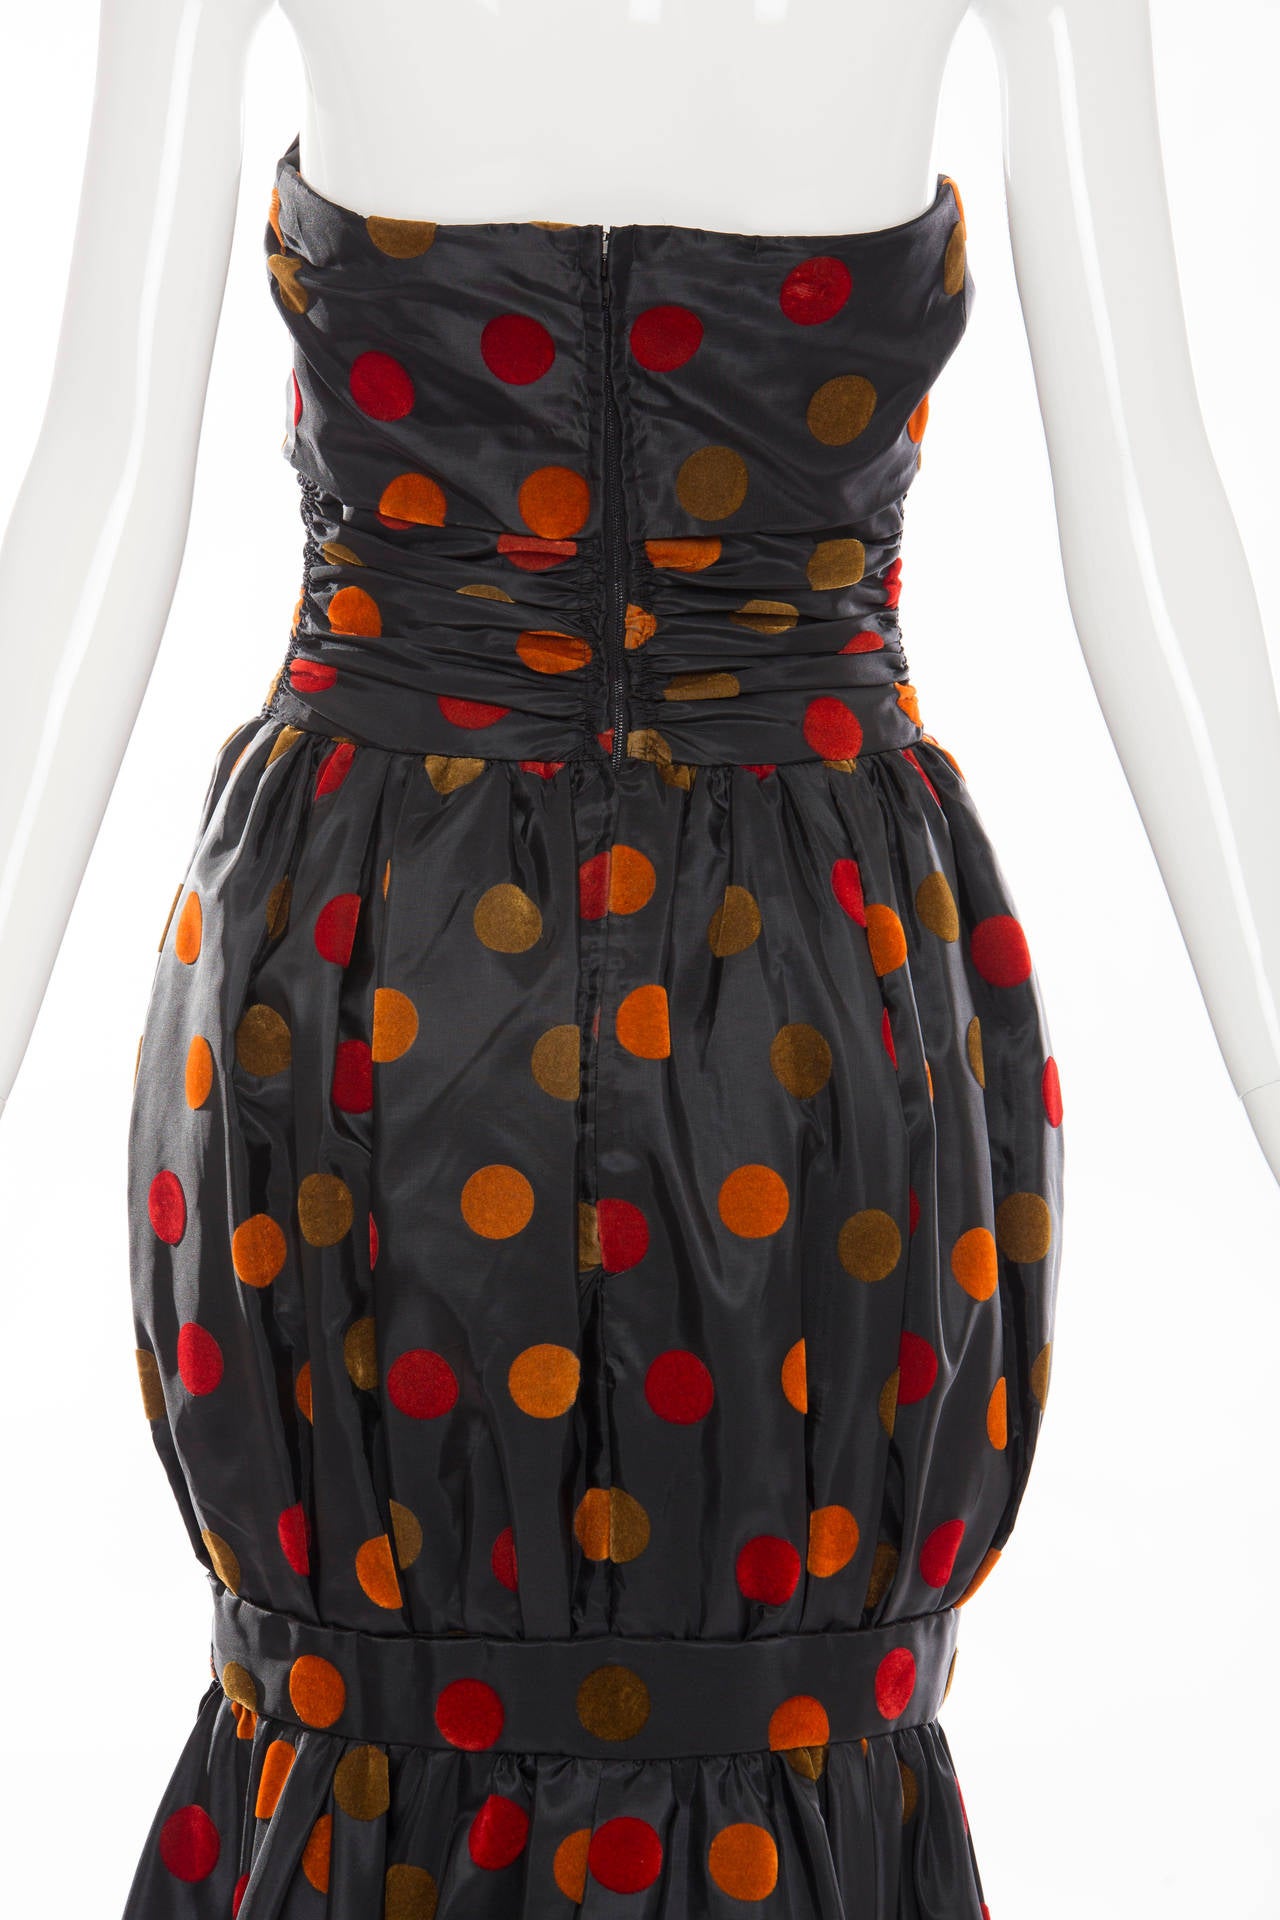 Nina Ricci Strapless Black Taffeta Velvet Polka Dots Evening Dress, Circa 1980s For Sale 1